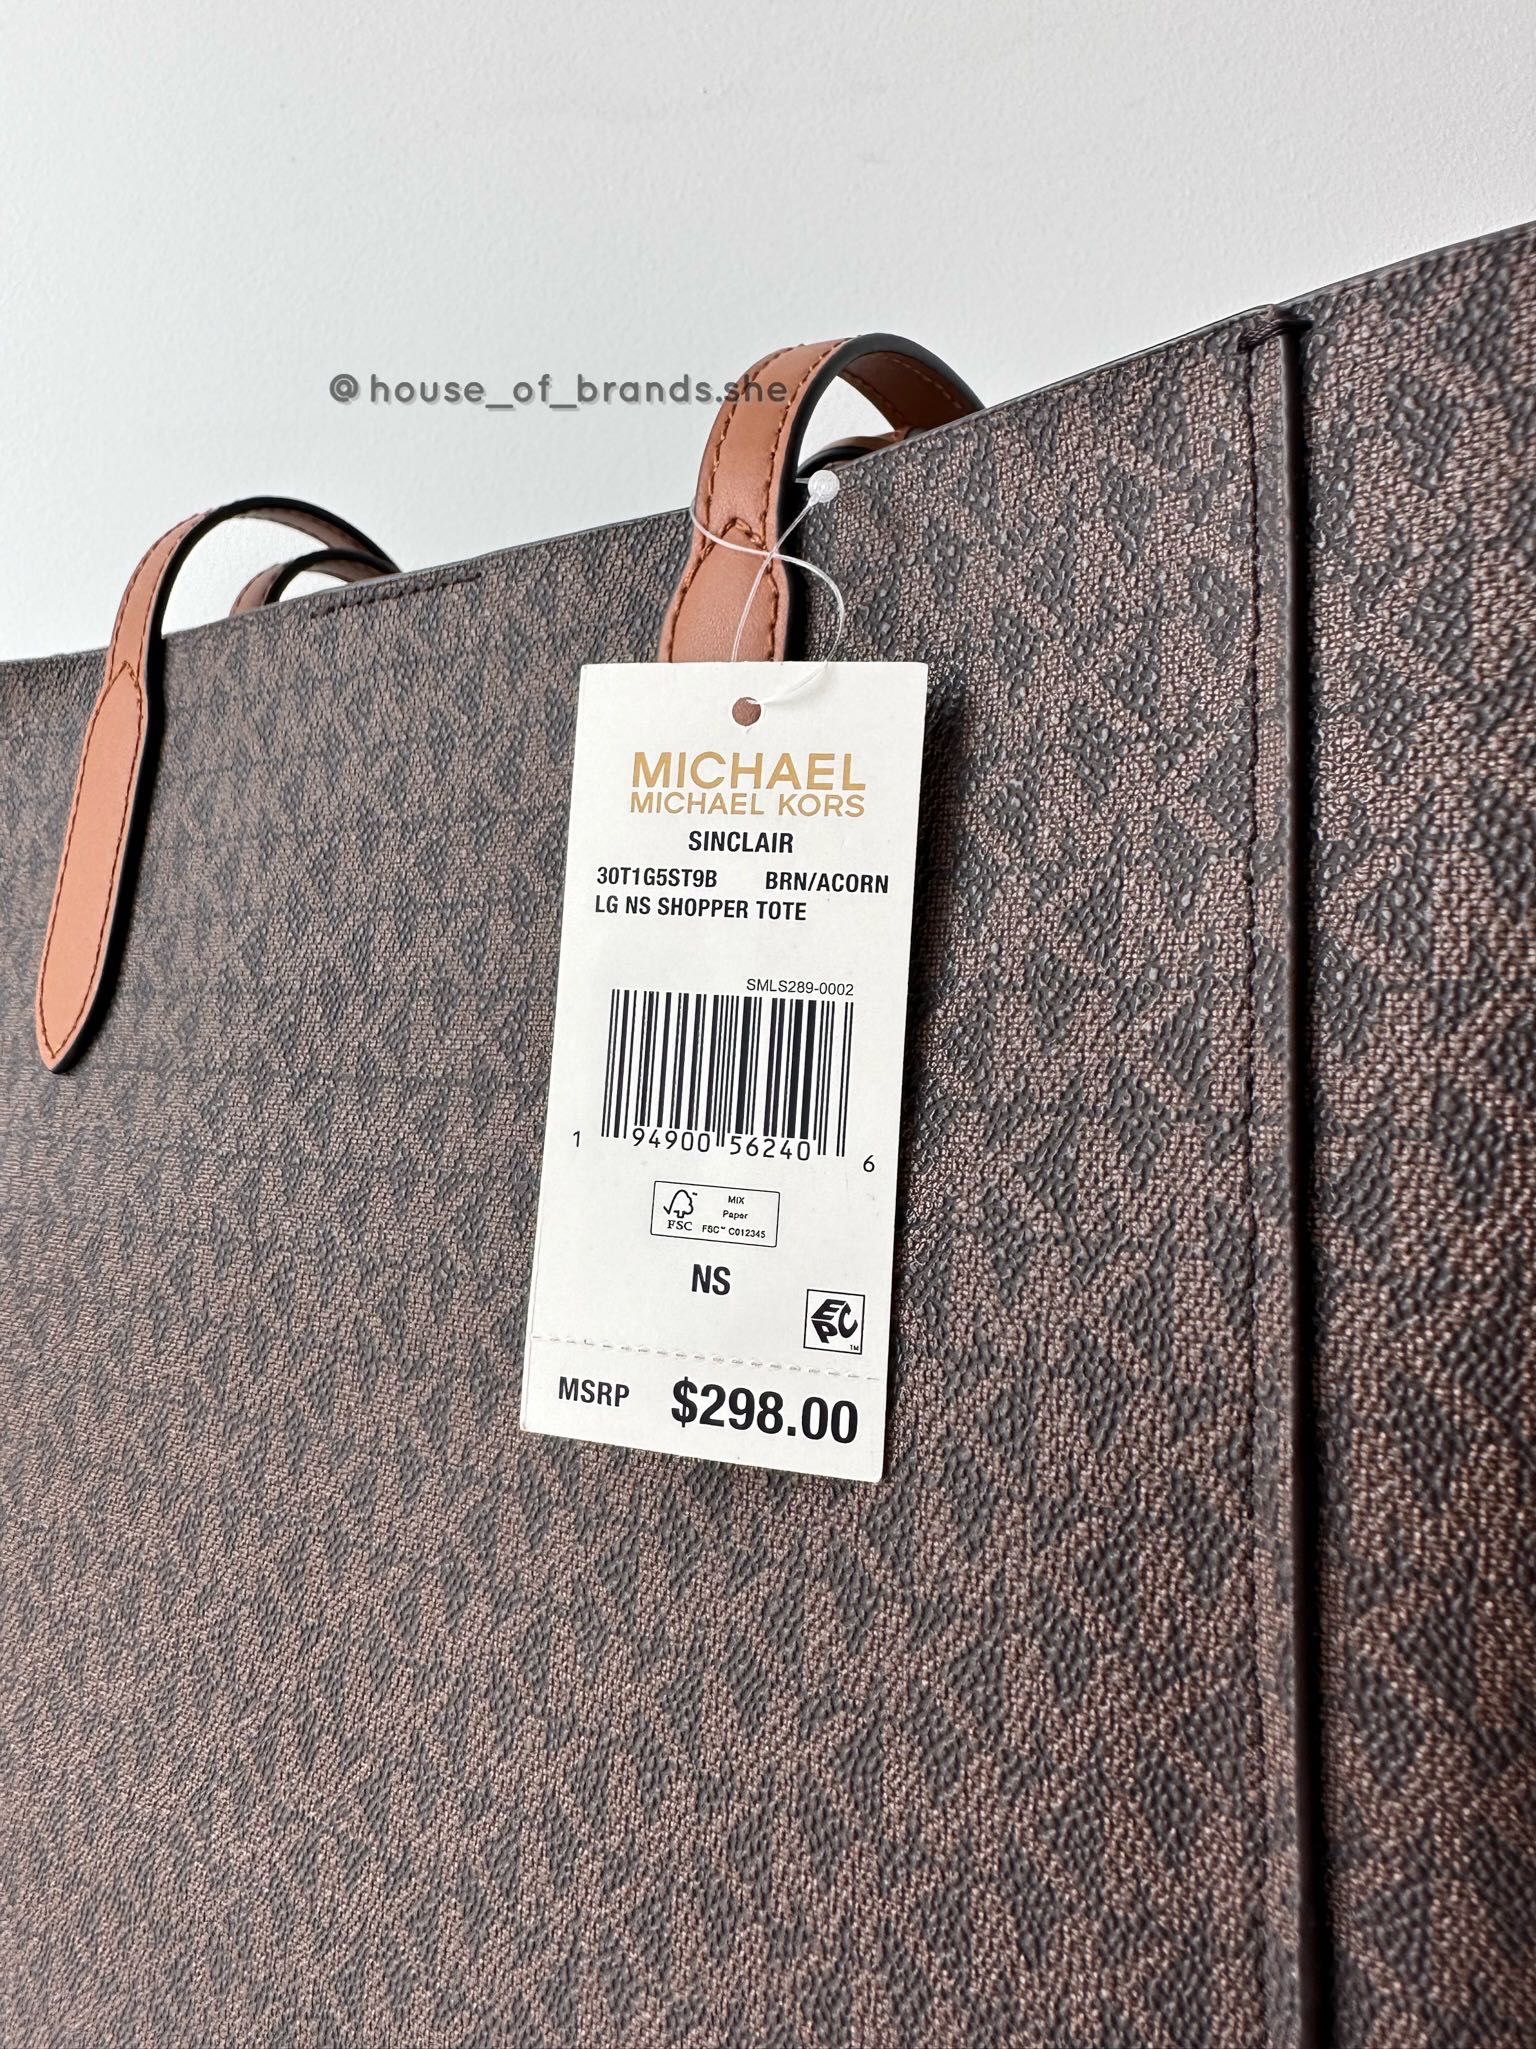 MICHAEL KORS Sinclair Shopper Жіноча сумочка шопер тоут женская сумка